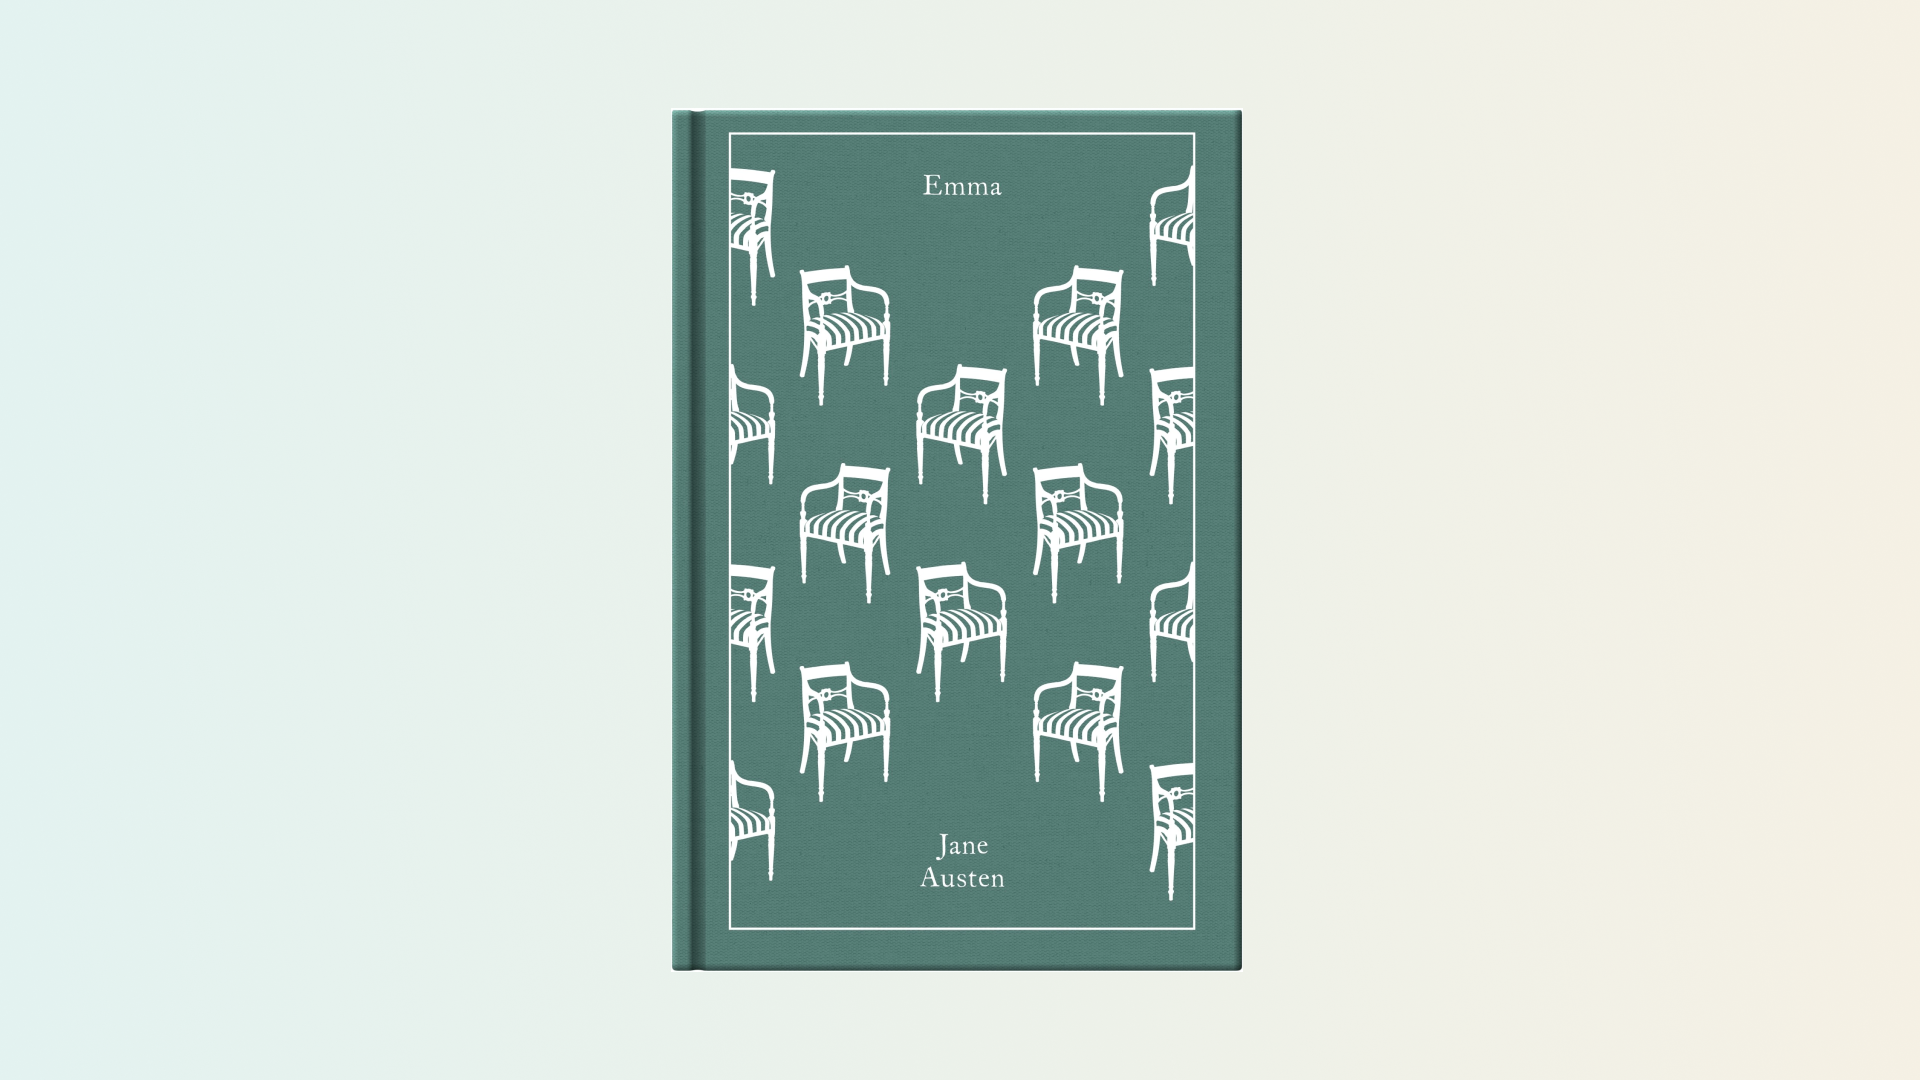 “Emma” by Jane Austen